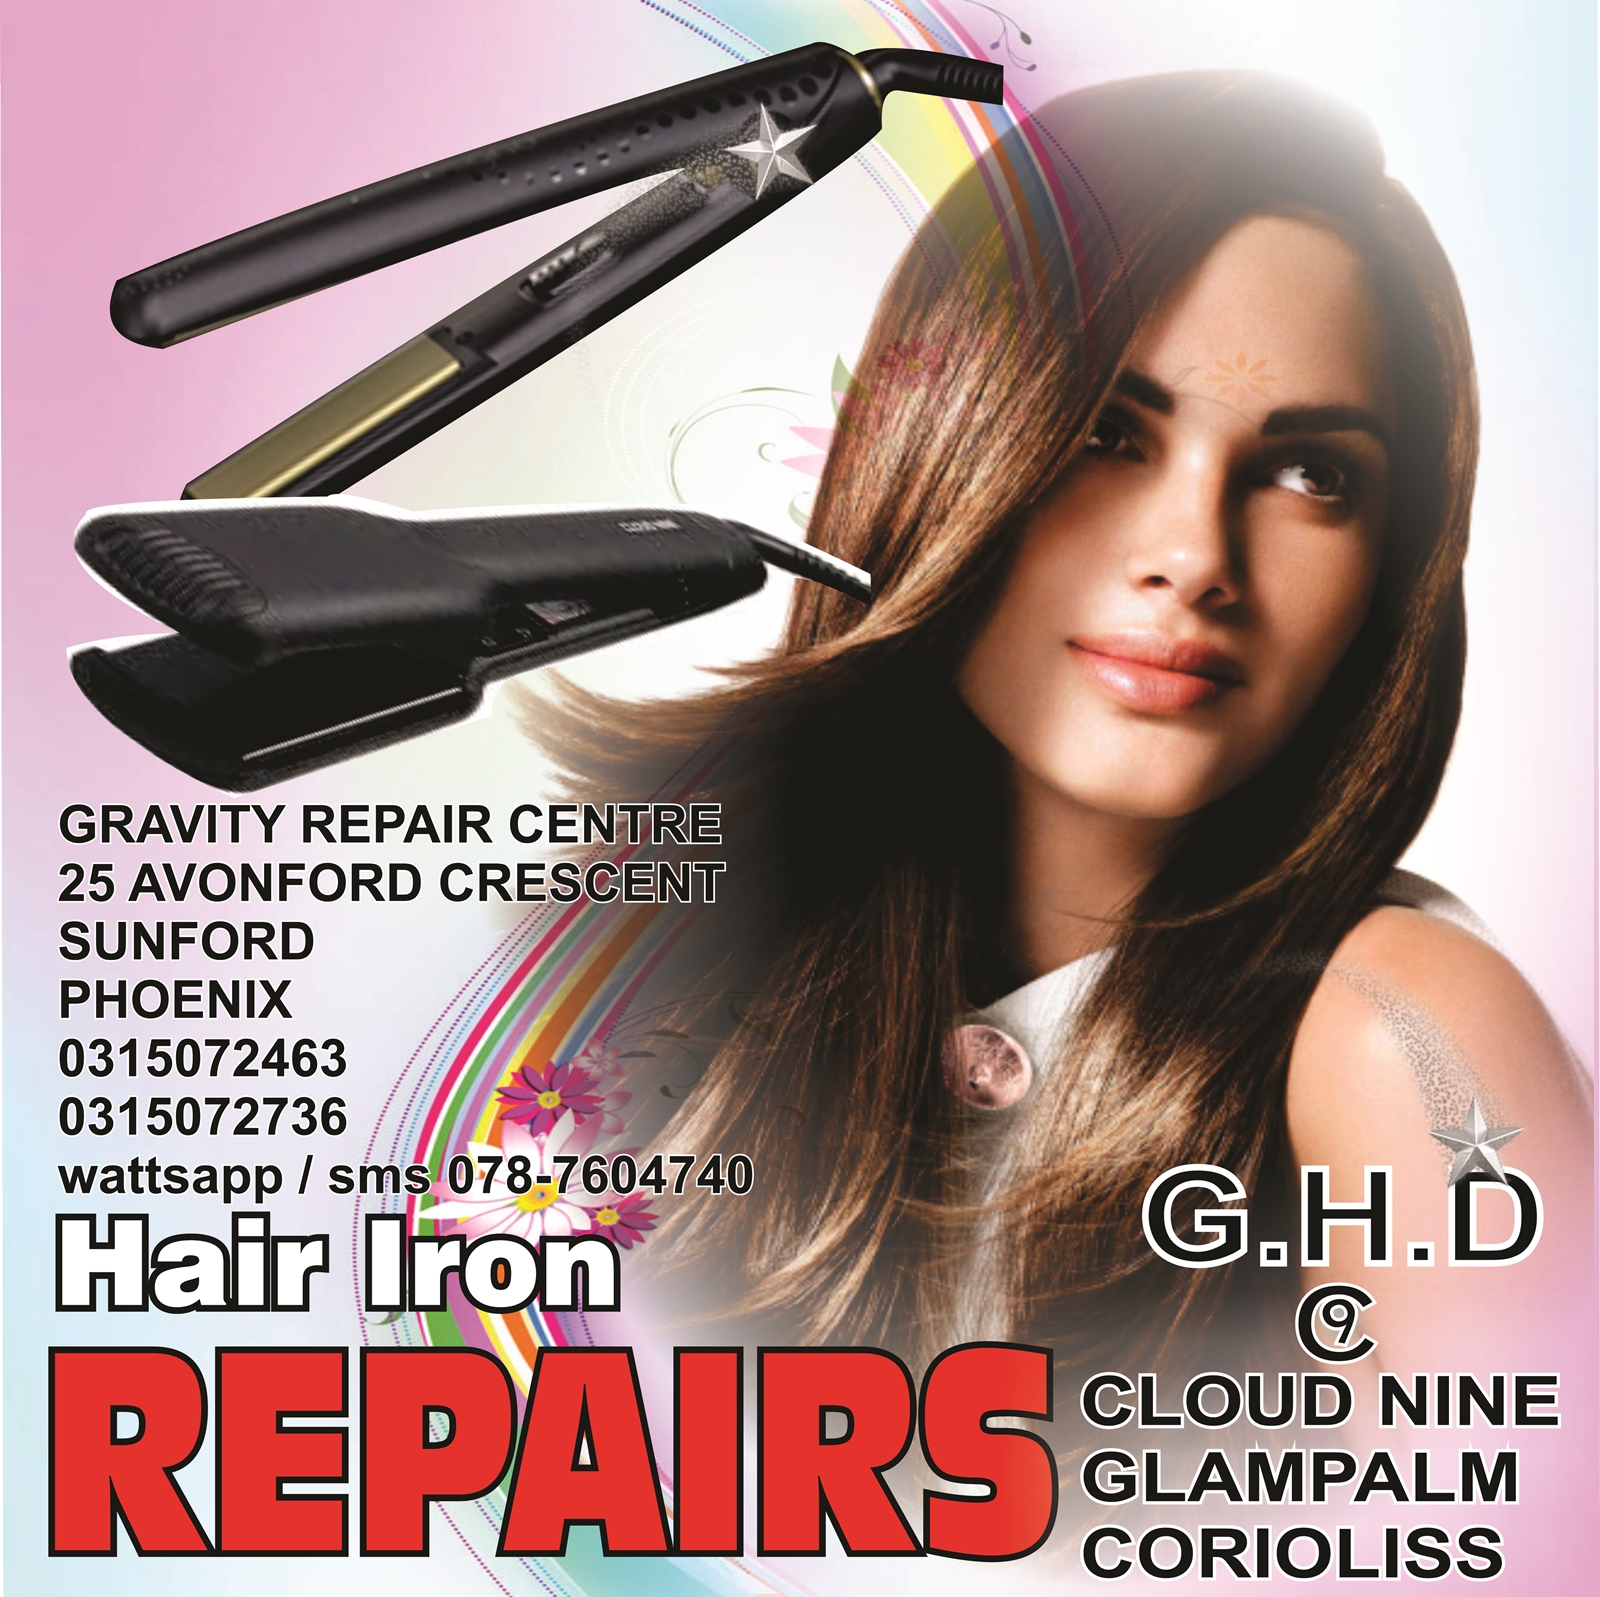 GHD REPAIRS CLOUD 9 REPAIRS GLAMPALM HAIR IRON REPAIRS CLOUDNINE HAIR IRON  REPAIRS BHE HAIR IRONS SPECIALIST veaudrey hair iron repair agents gravity 0787604740